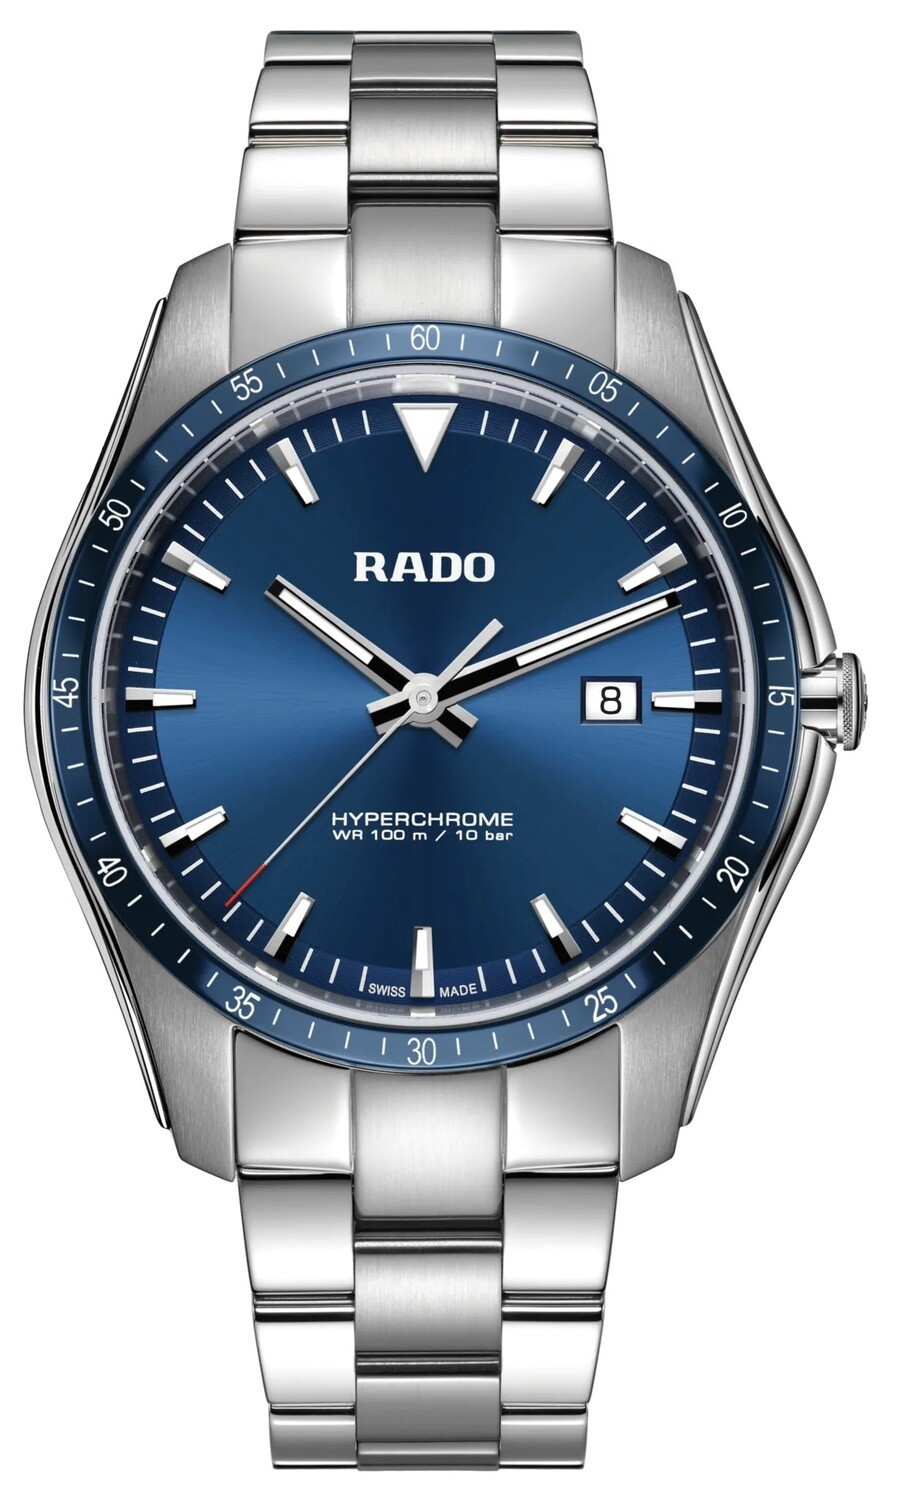 reloj hombre RADO HyperChrome R32502203 44.9mm quartz cristal de zafiro anti-reflejos 100m WR brazalete acero y titanio